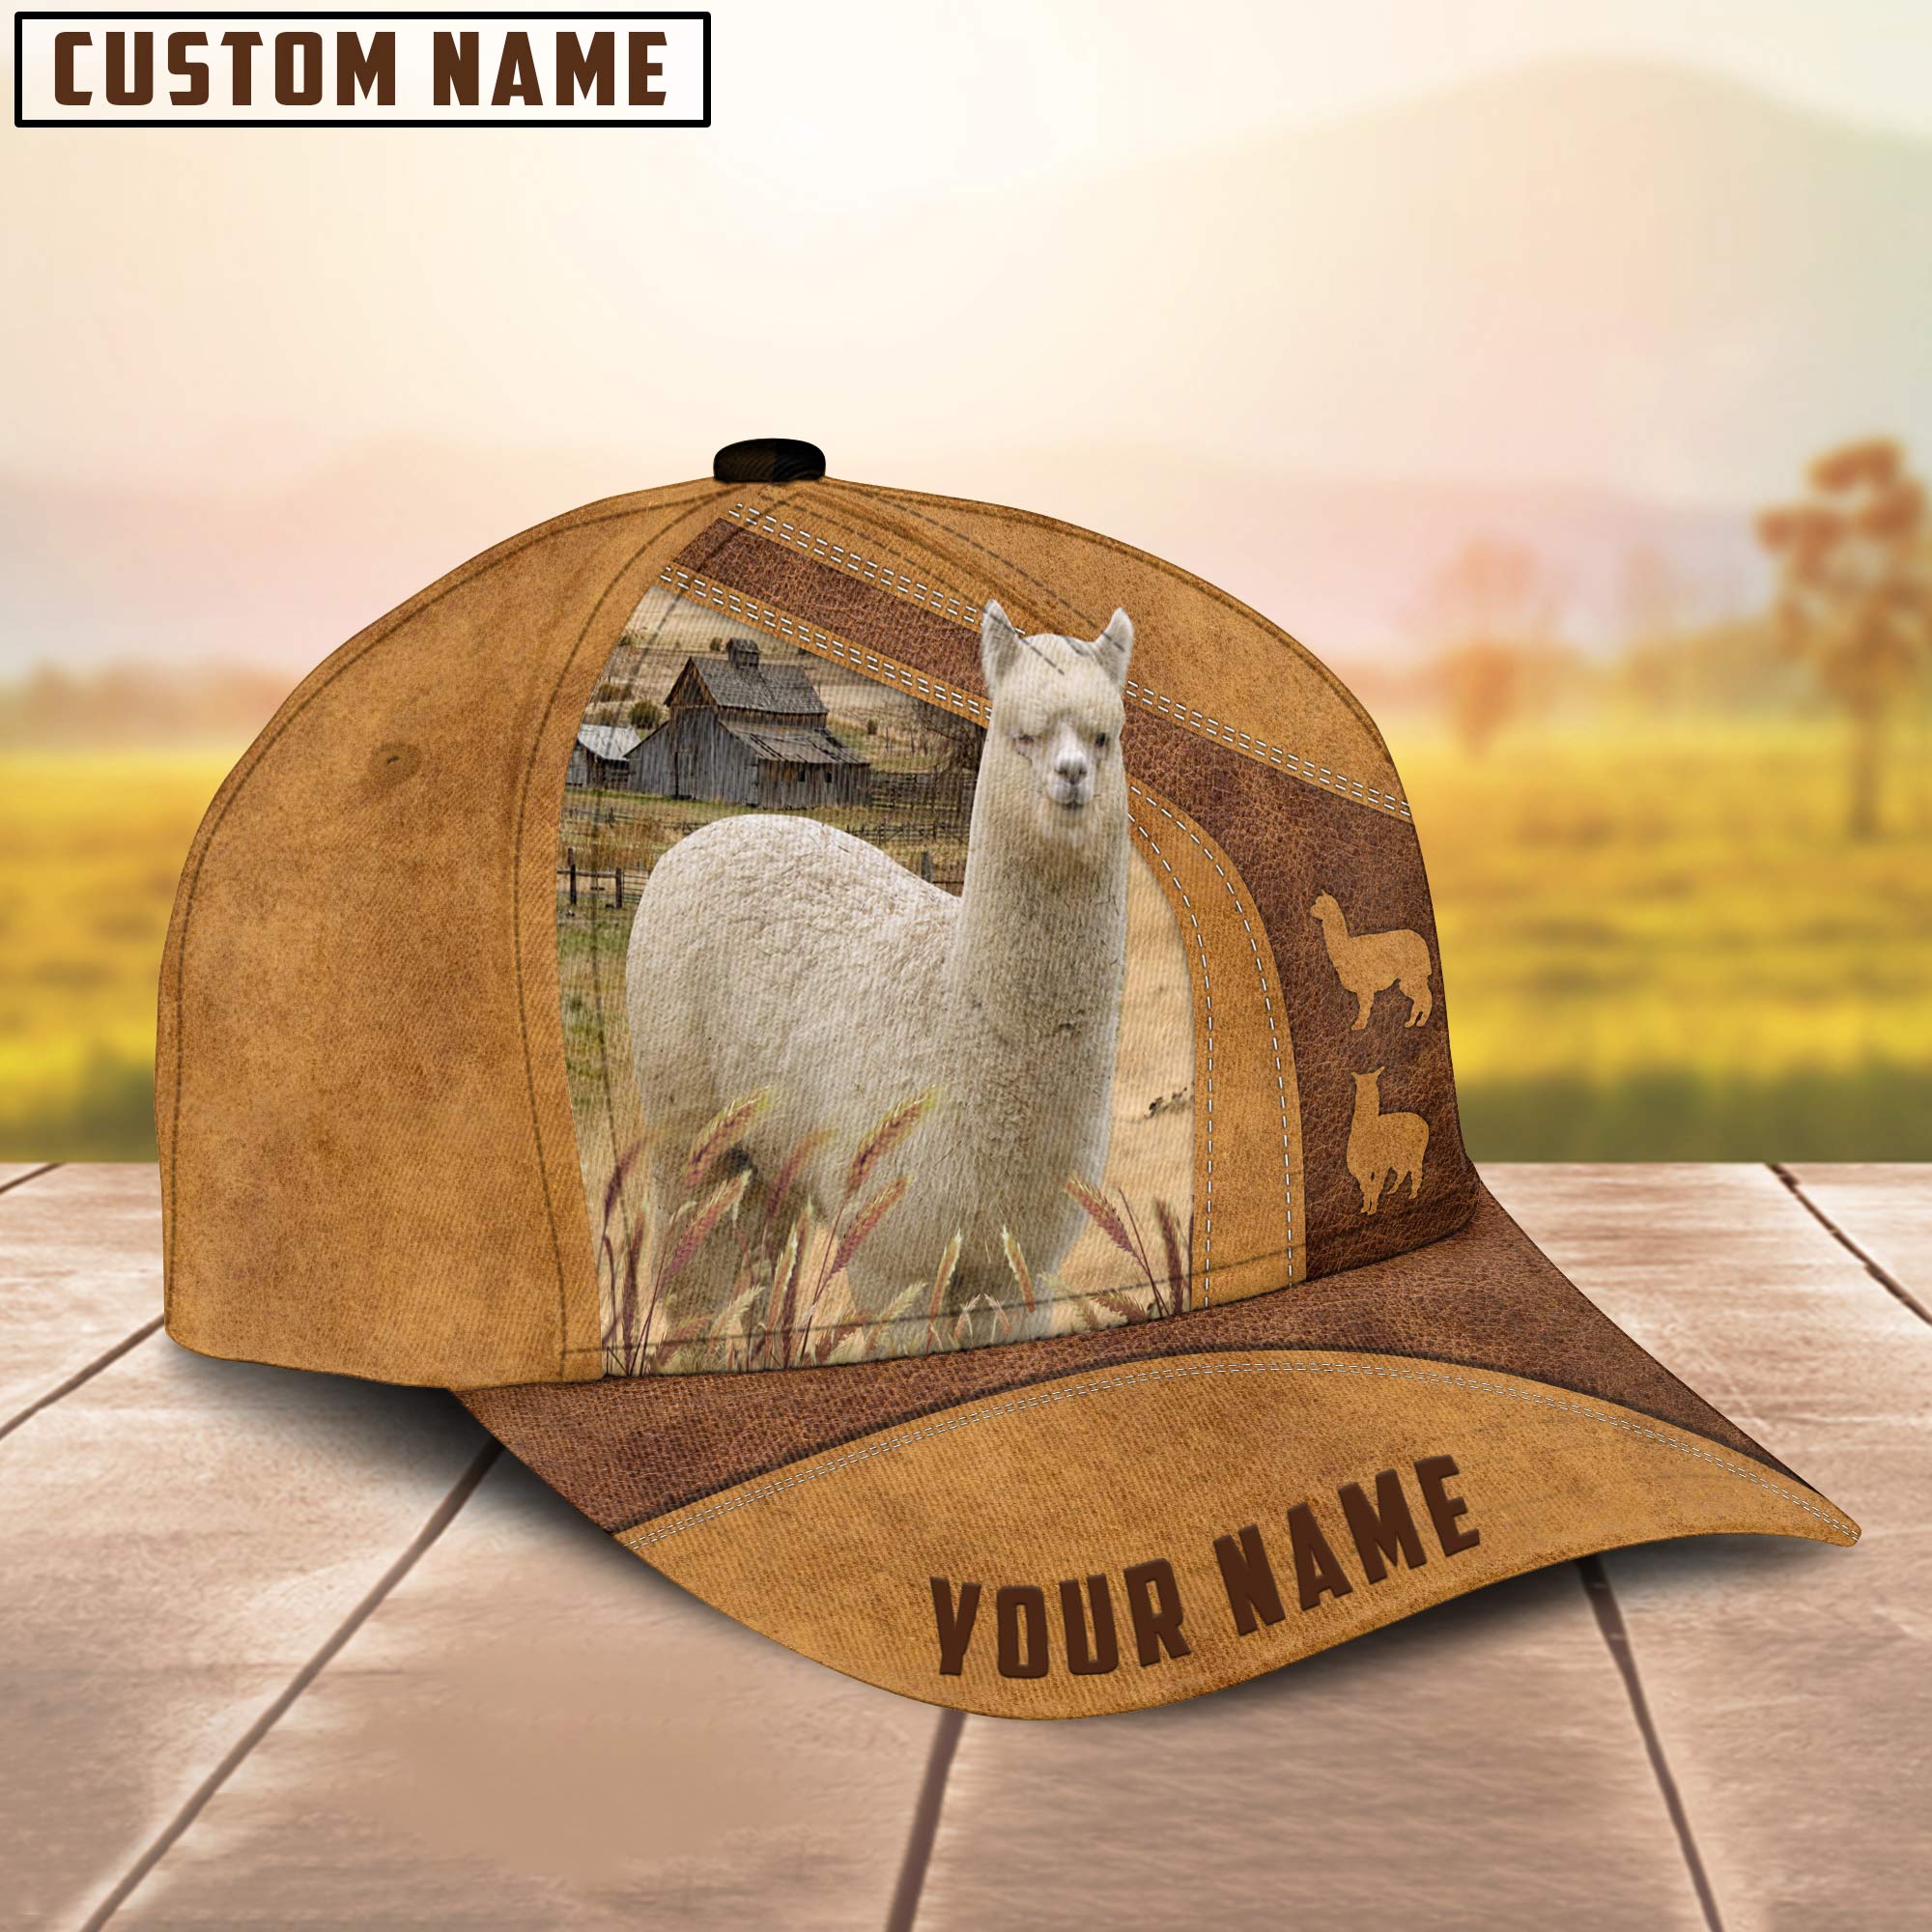 Customized Lhama Cap / Lhama Hat/ Farm Baseball Hat/ Cap Hat For Farmer Farm Lover